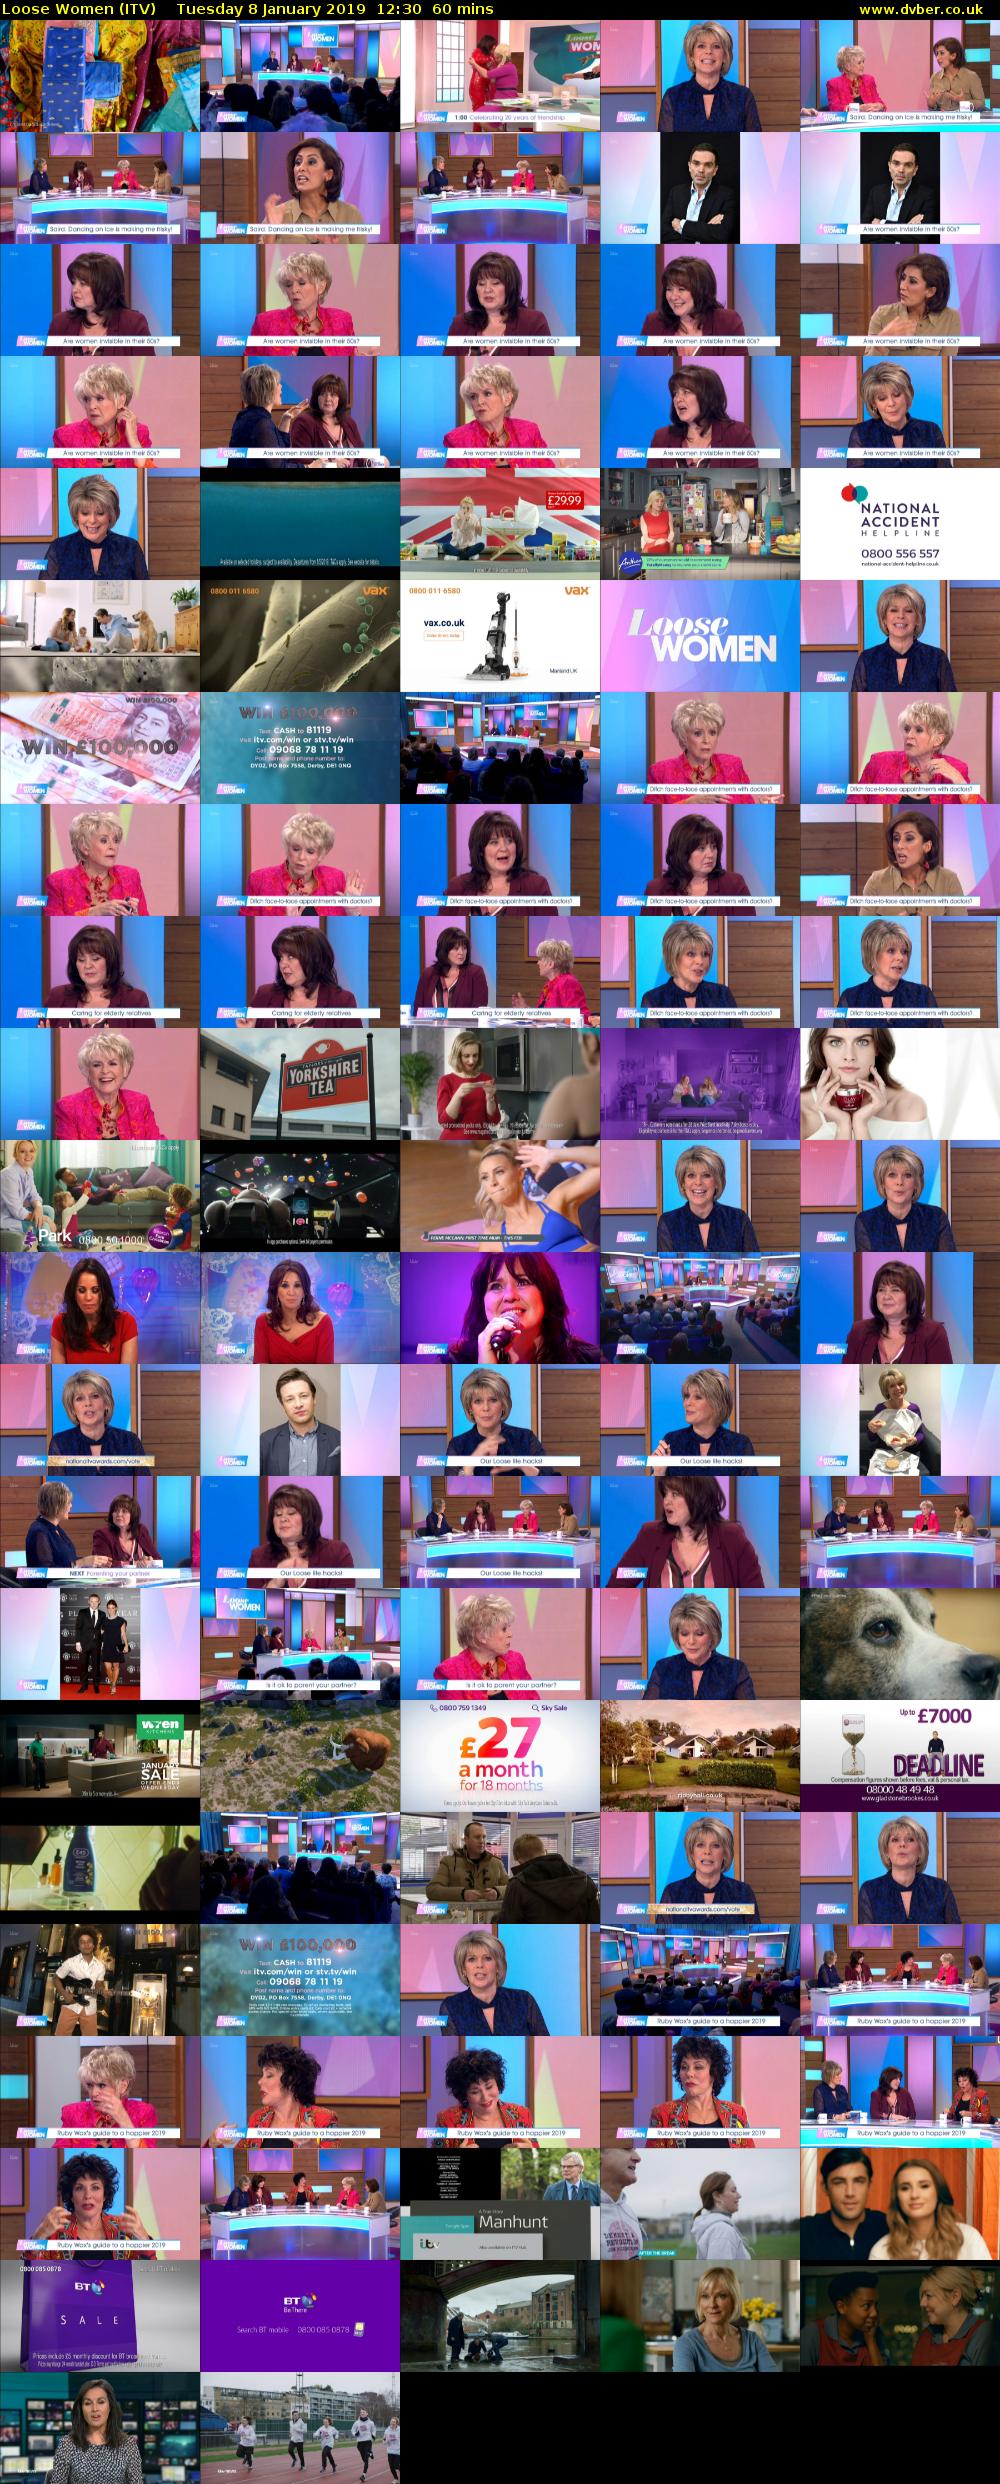 Loose Women (ITV) Tuesday 8 January 2019 12:30 - 13:30